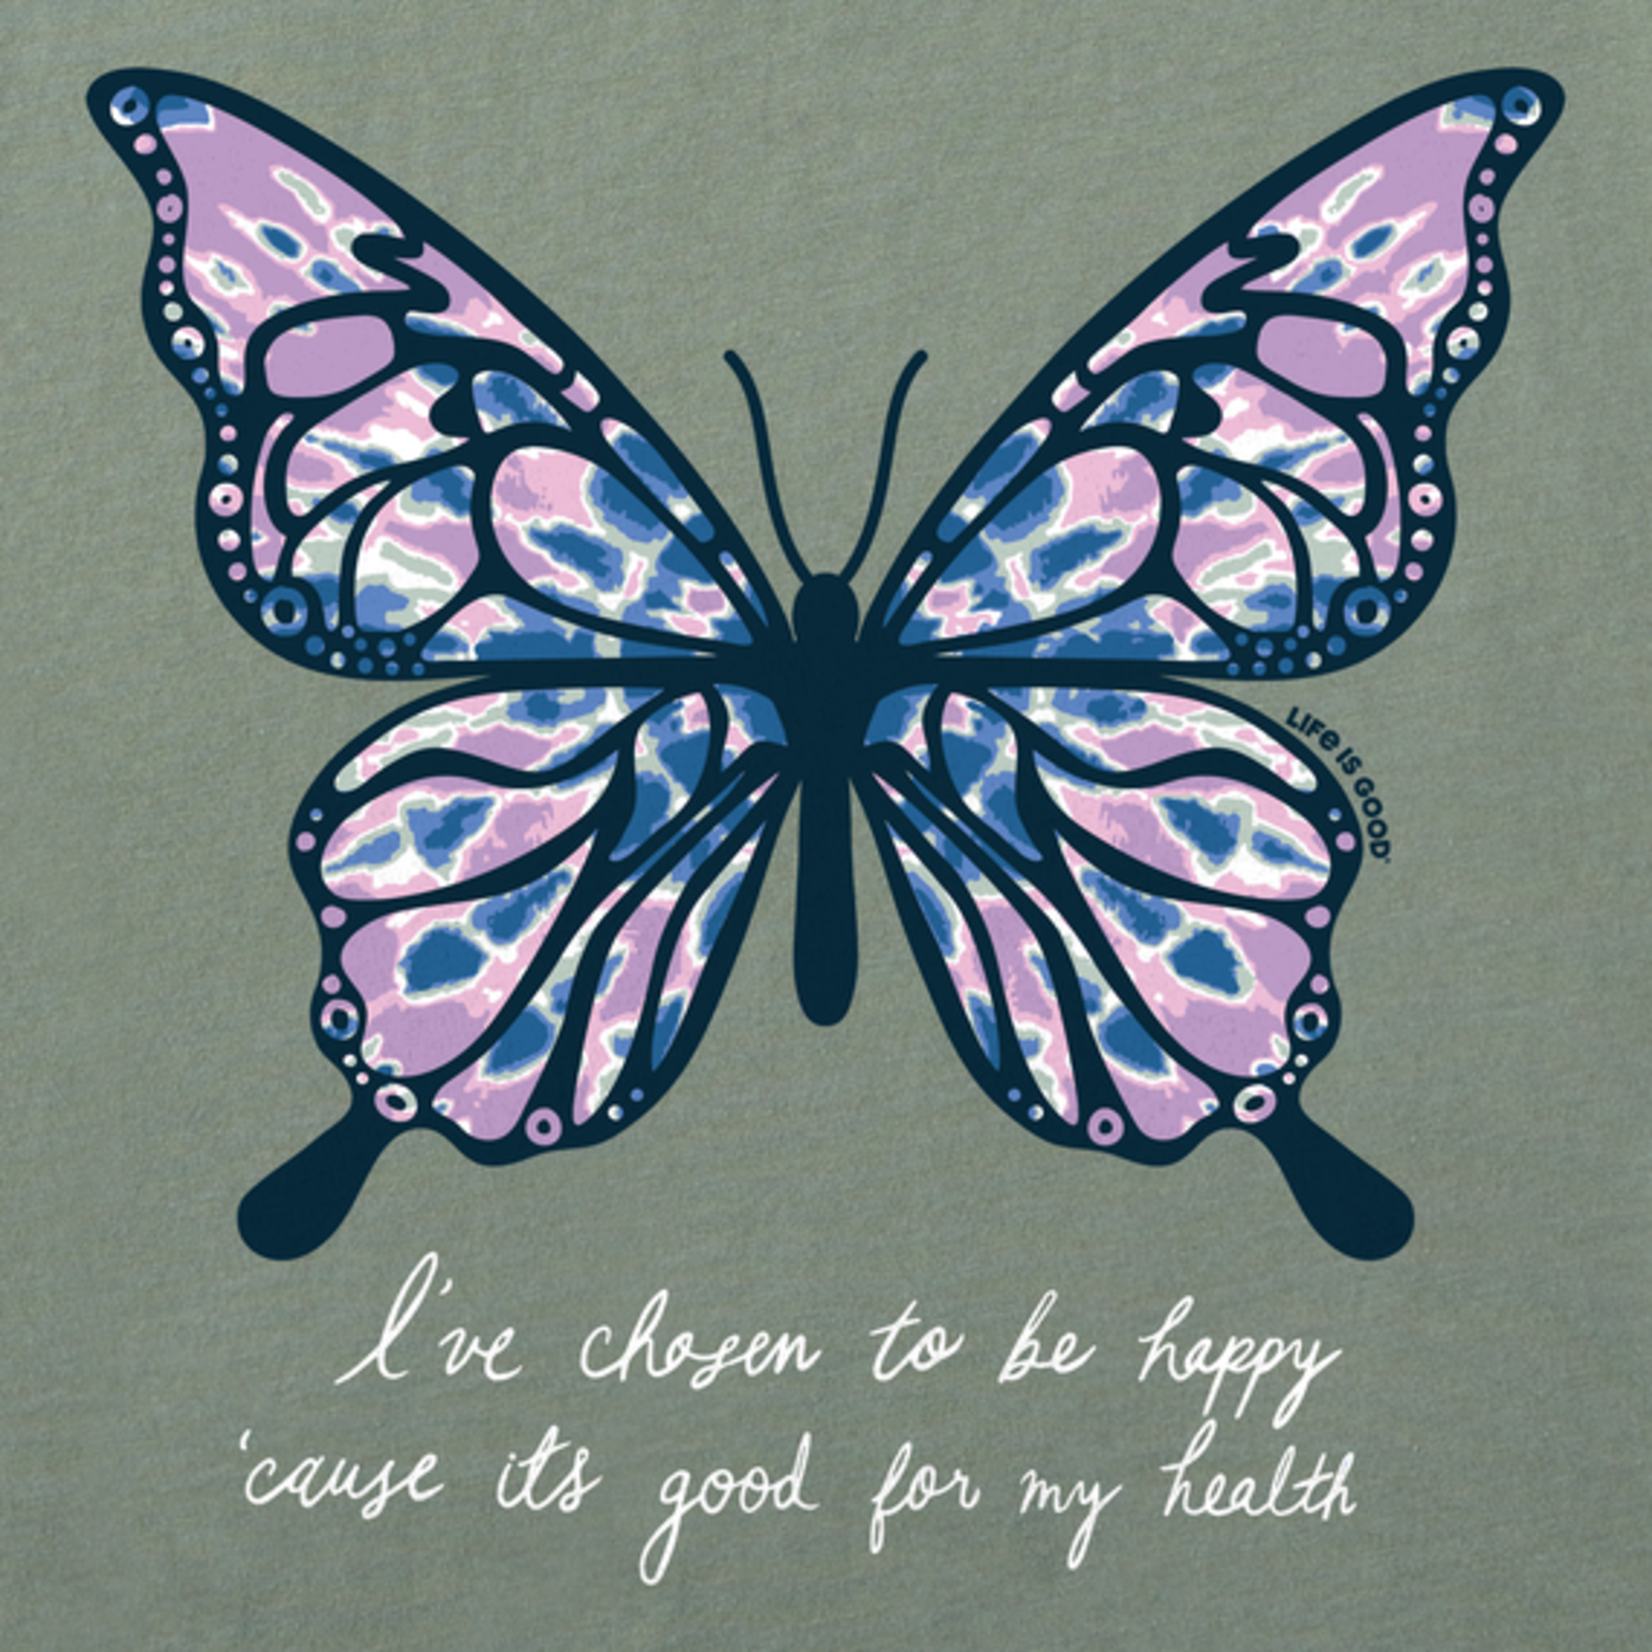 Life is Good Tie Dye Butterfly Hooded Crusher-LITE